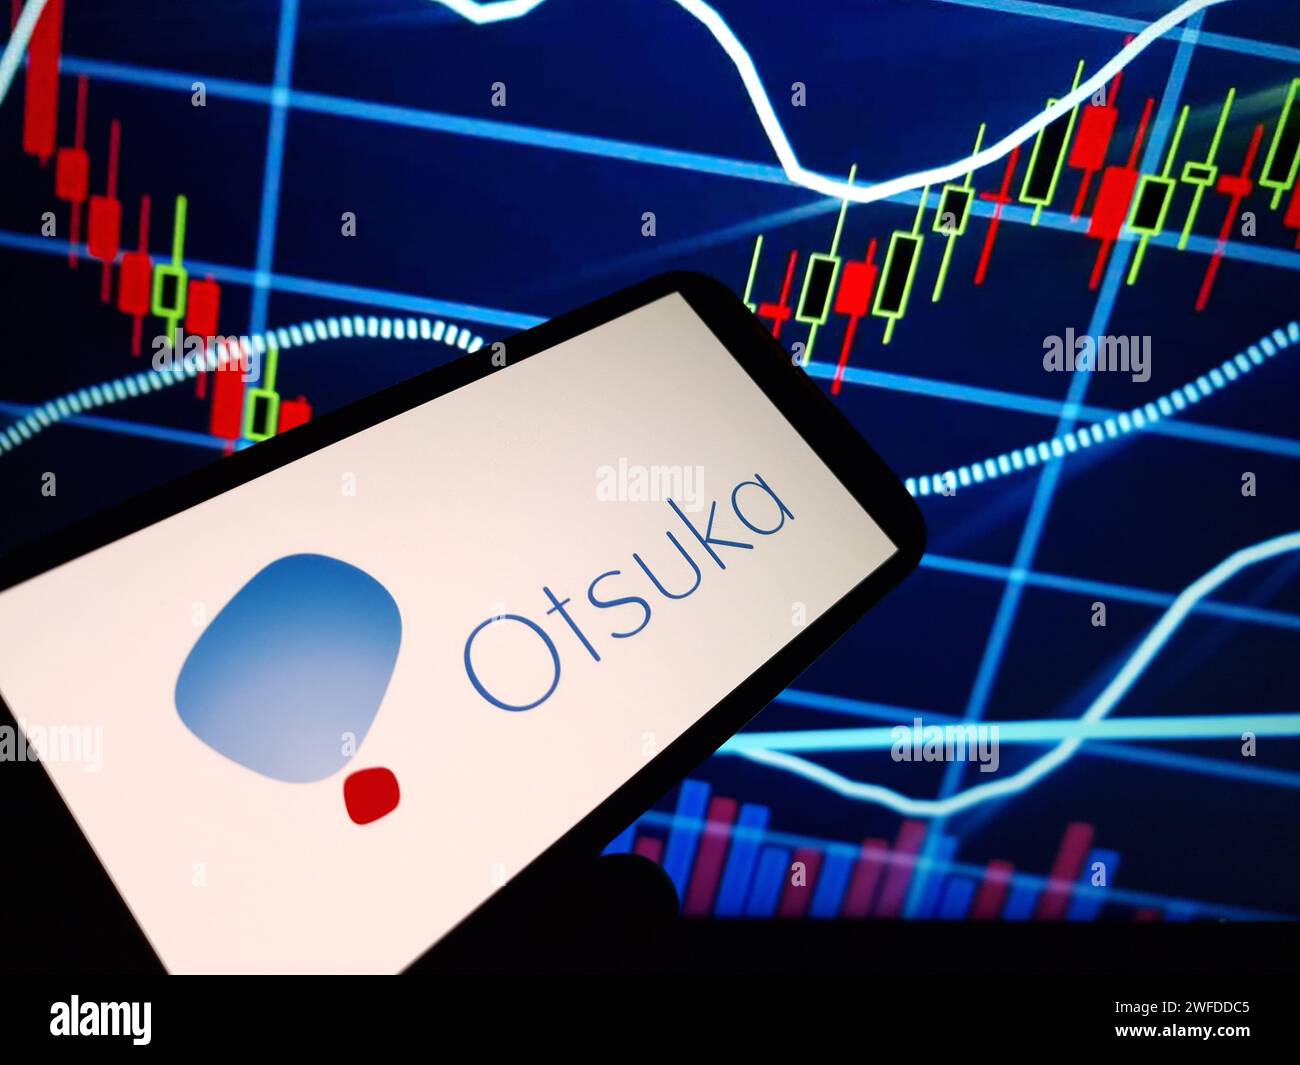 Konskie, Poland - January 27, 2024: Otsuka Pharmaceutical company logo displayed on mobile phone screen Stock Photo